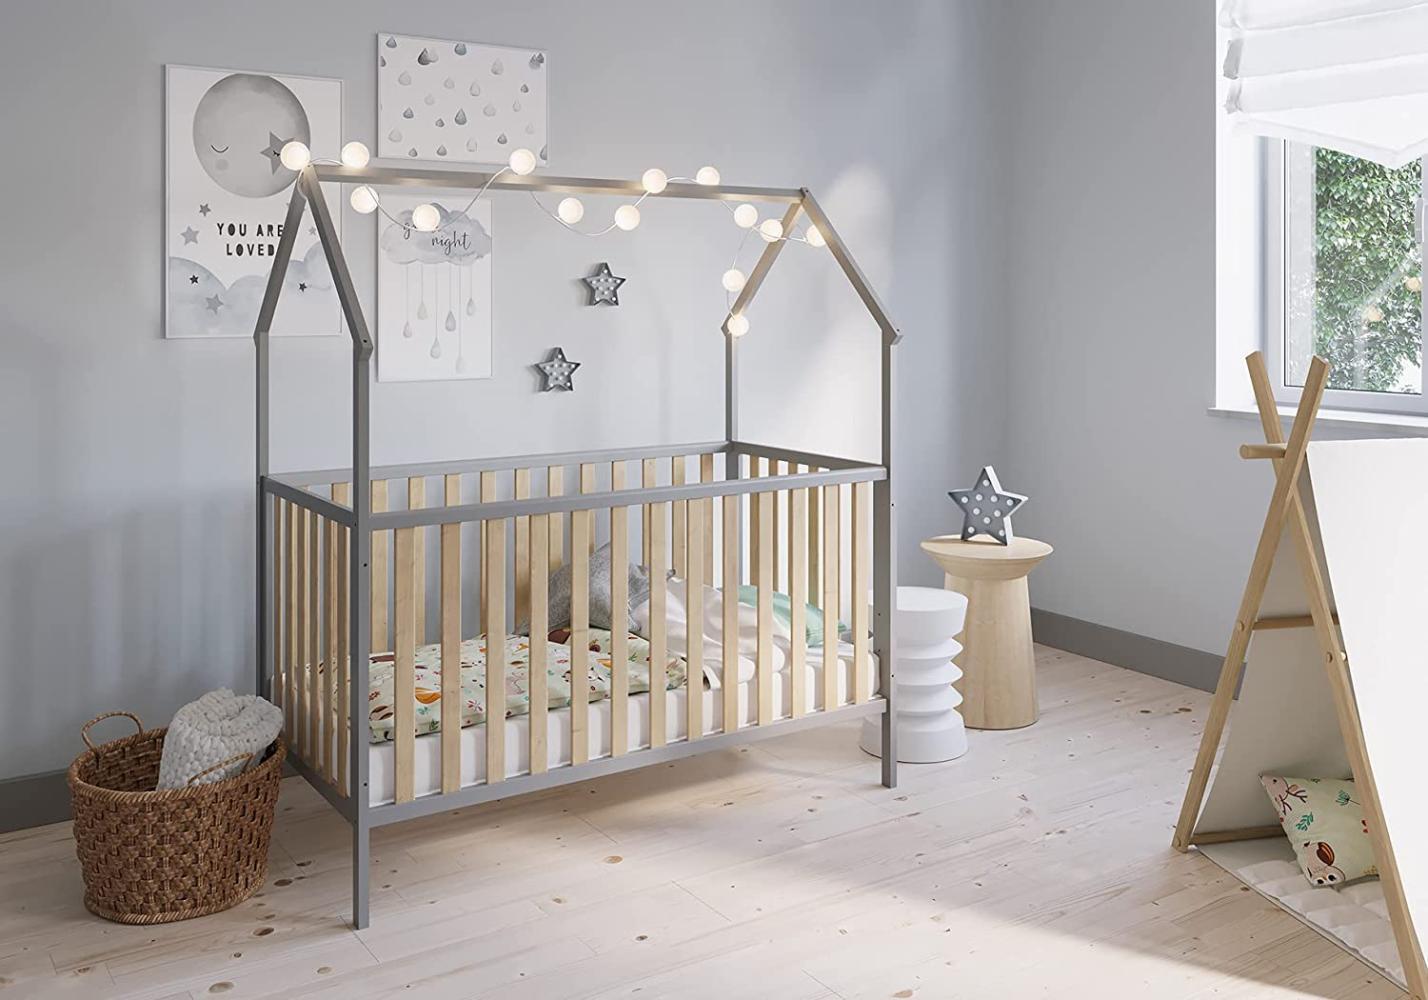 FabiMax 'Schlafmütze' Kinderbett, 70 x 140 cm, grau/natur, mit Matratze Classic, Kiefer massiv, 3-fach höhenverstellbar, umbaubar Bild 1